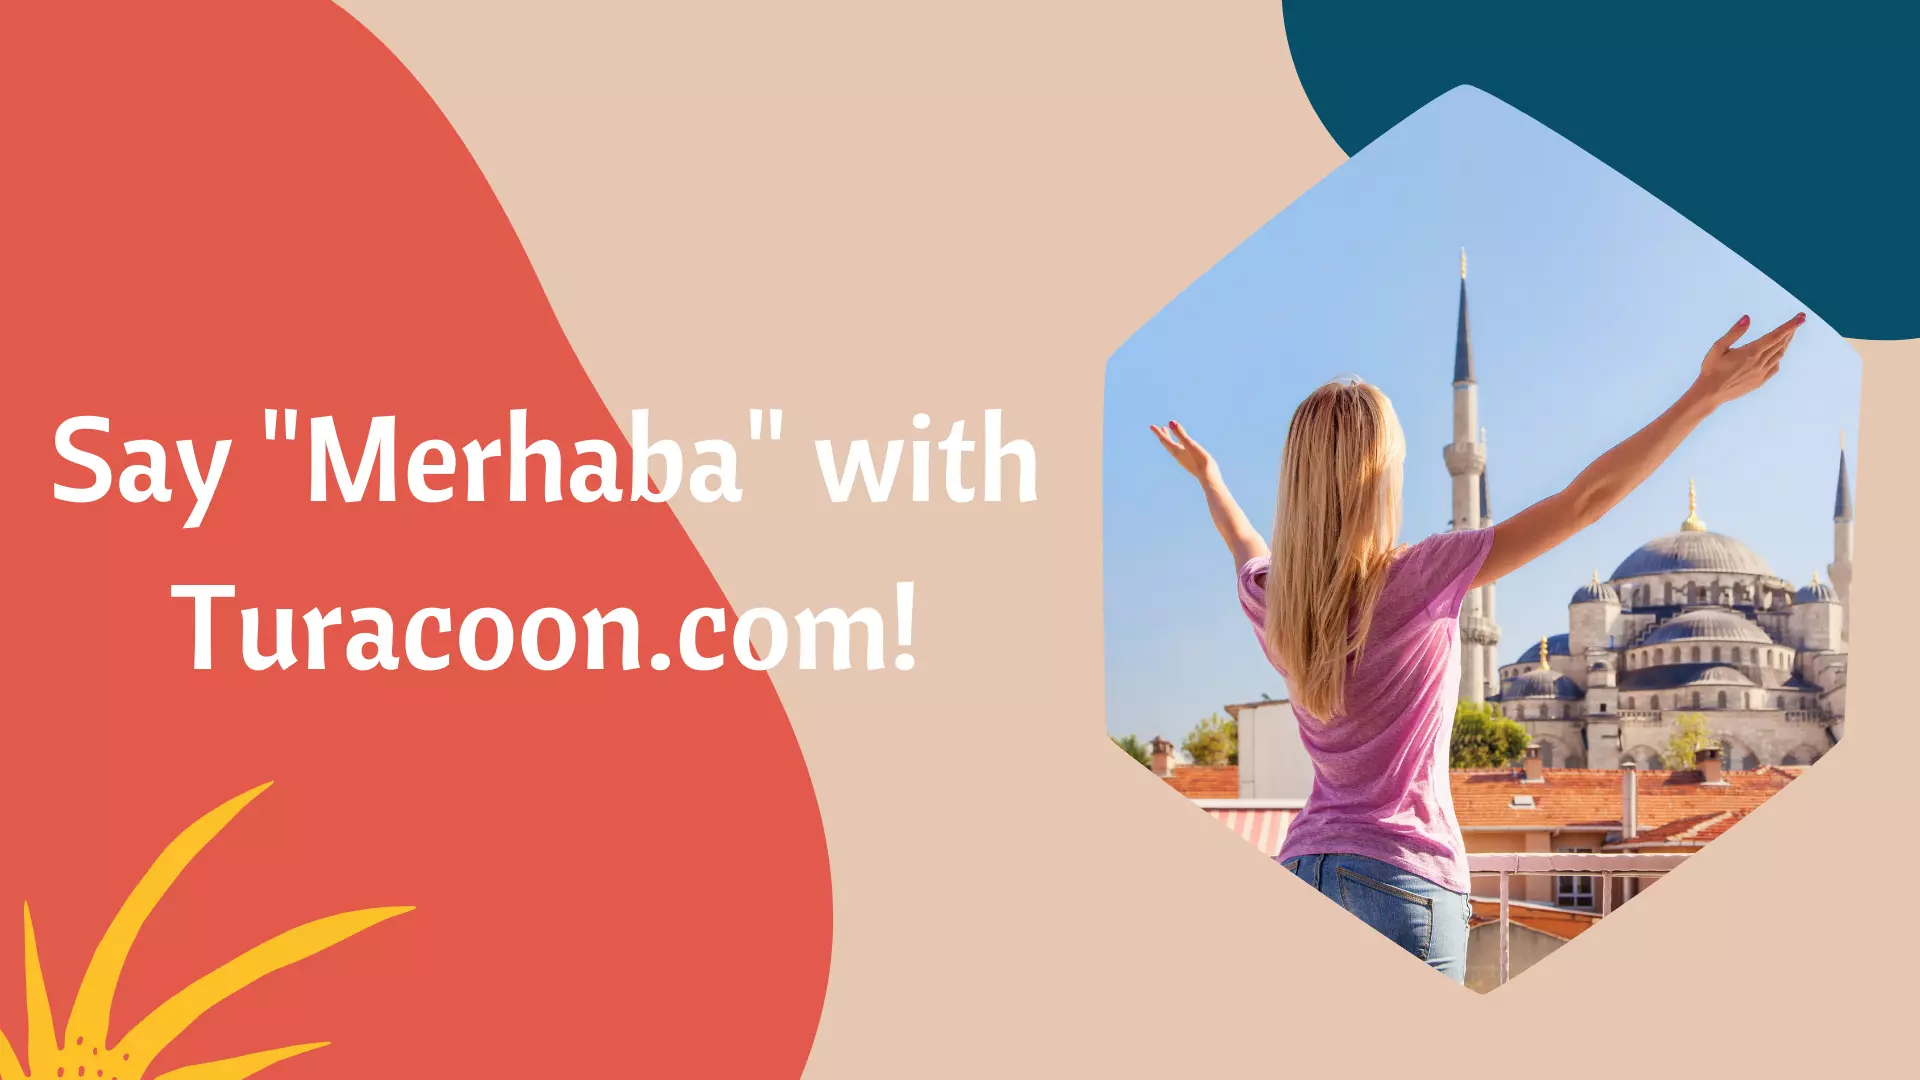 Say "Merhaba" with Turacoon.com!